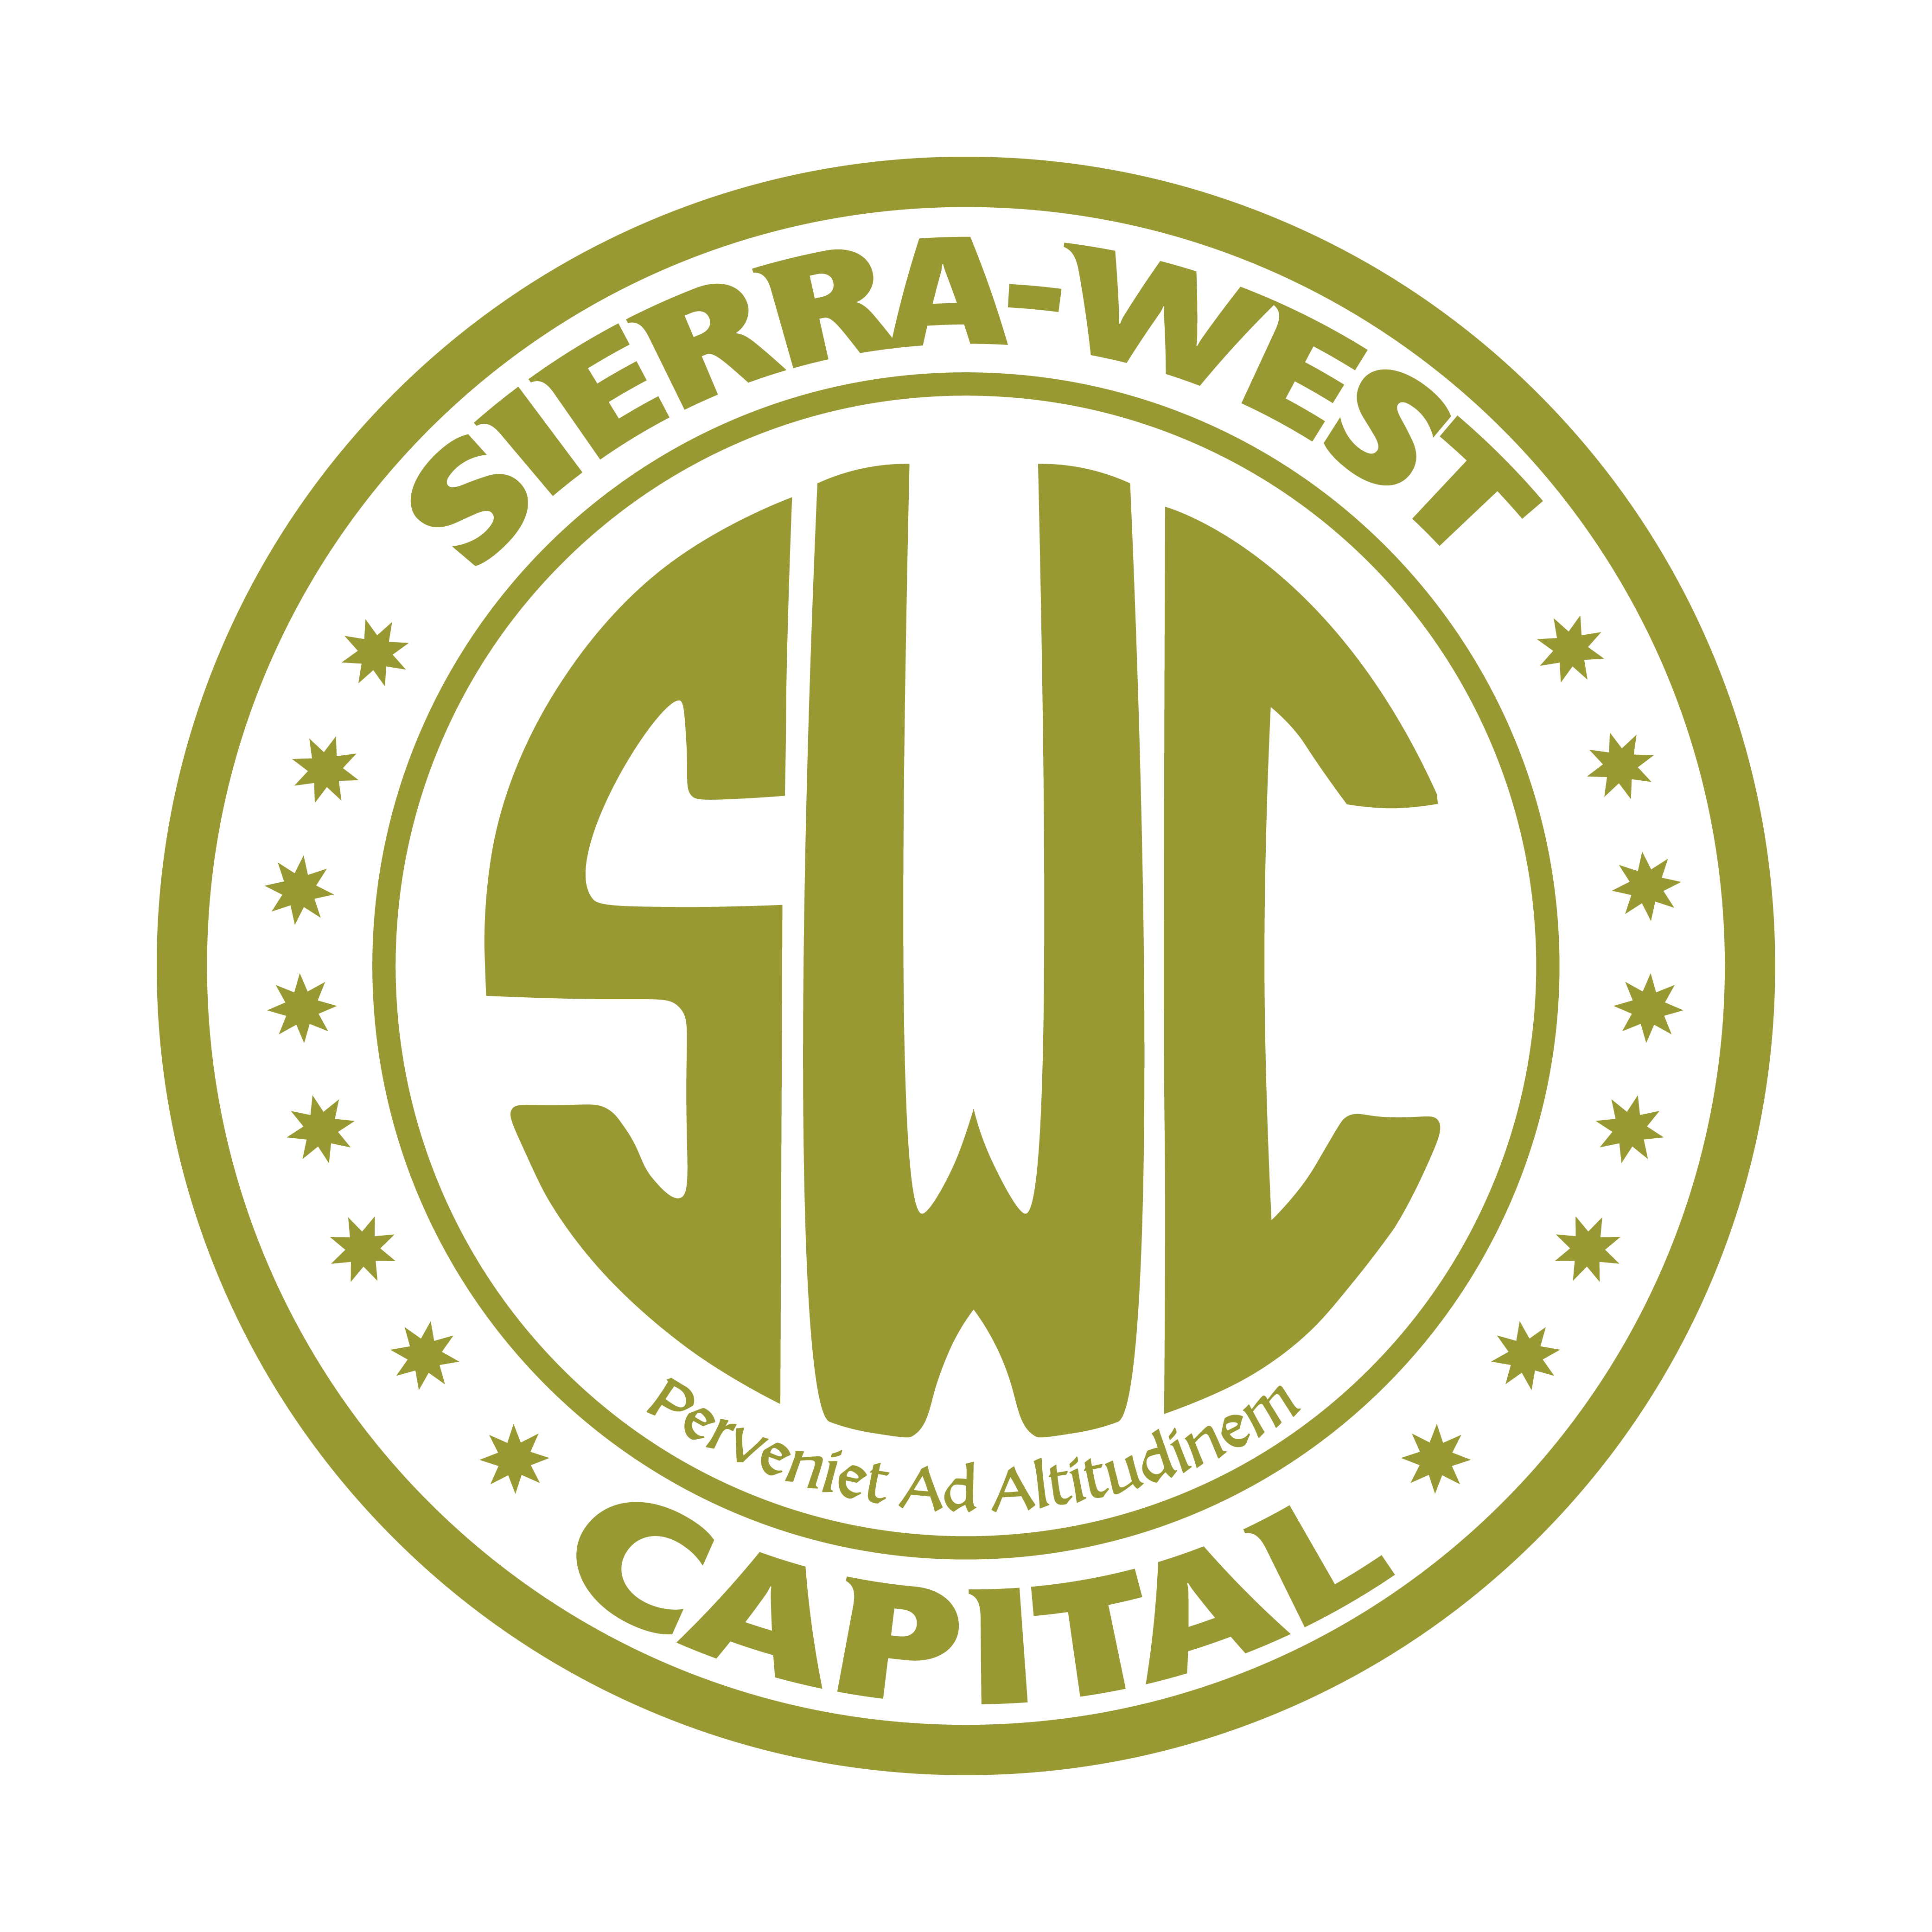 Sierra-West Capital